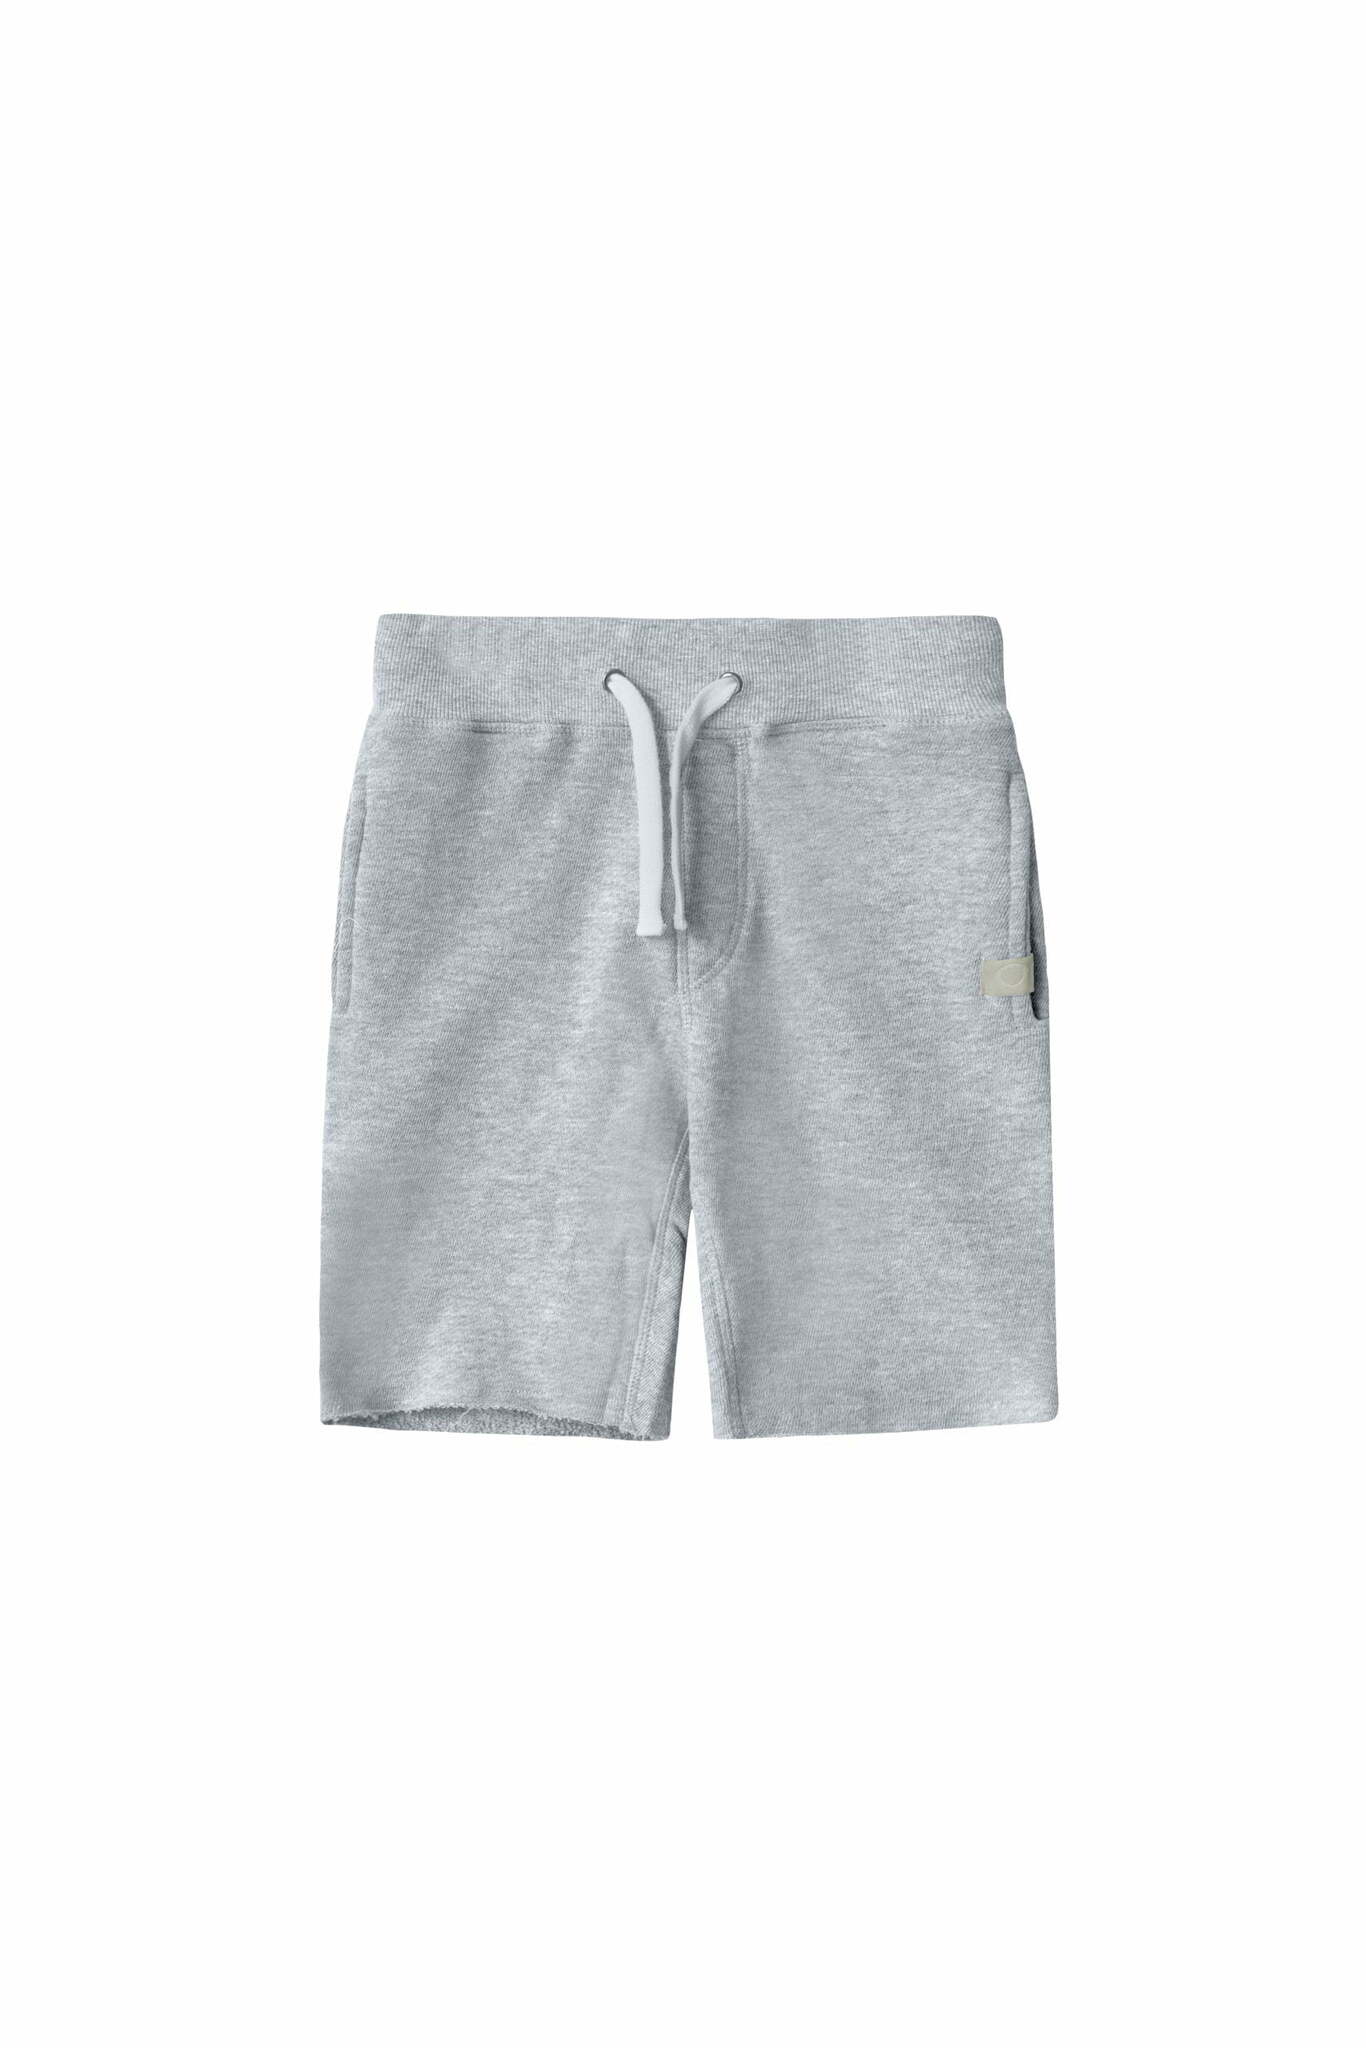 Robin shorts grey melange